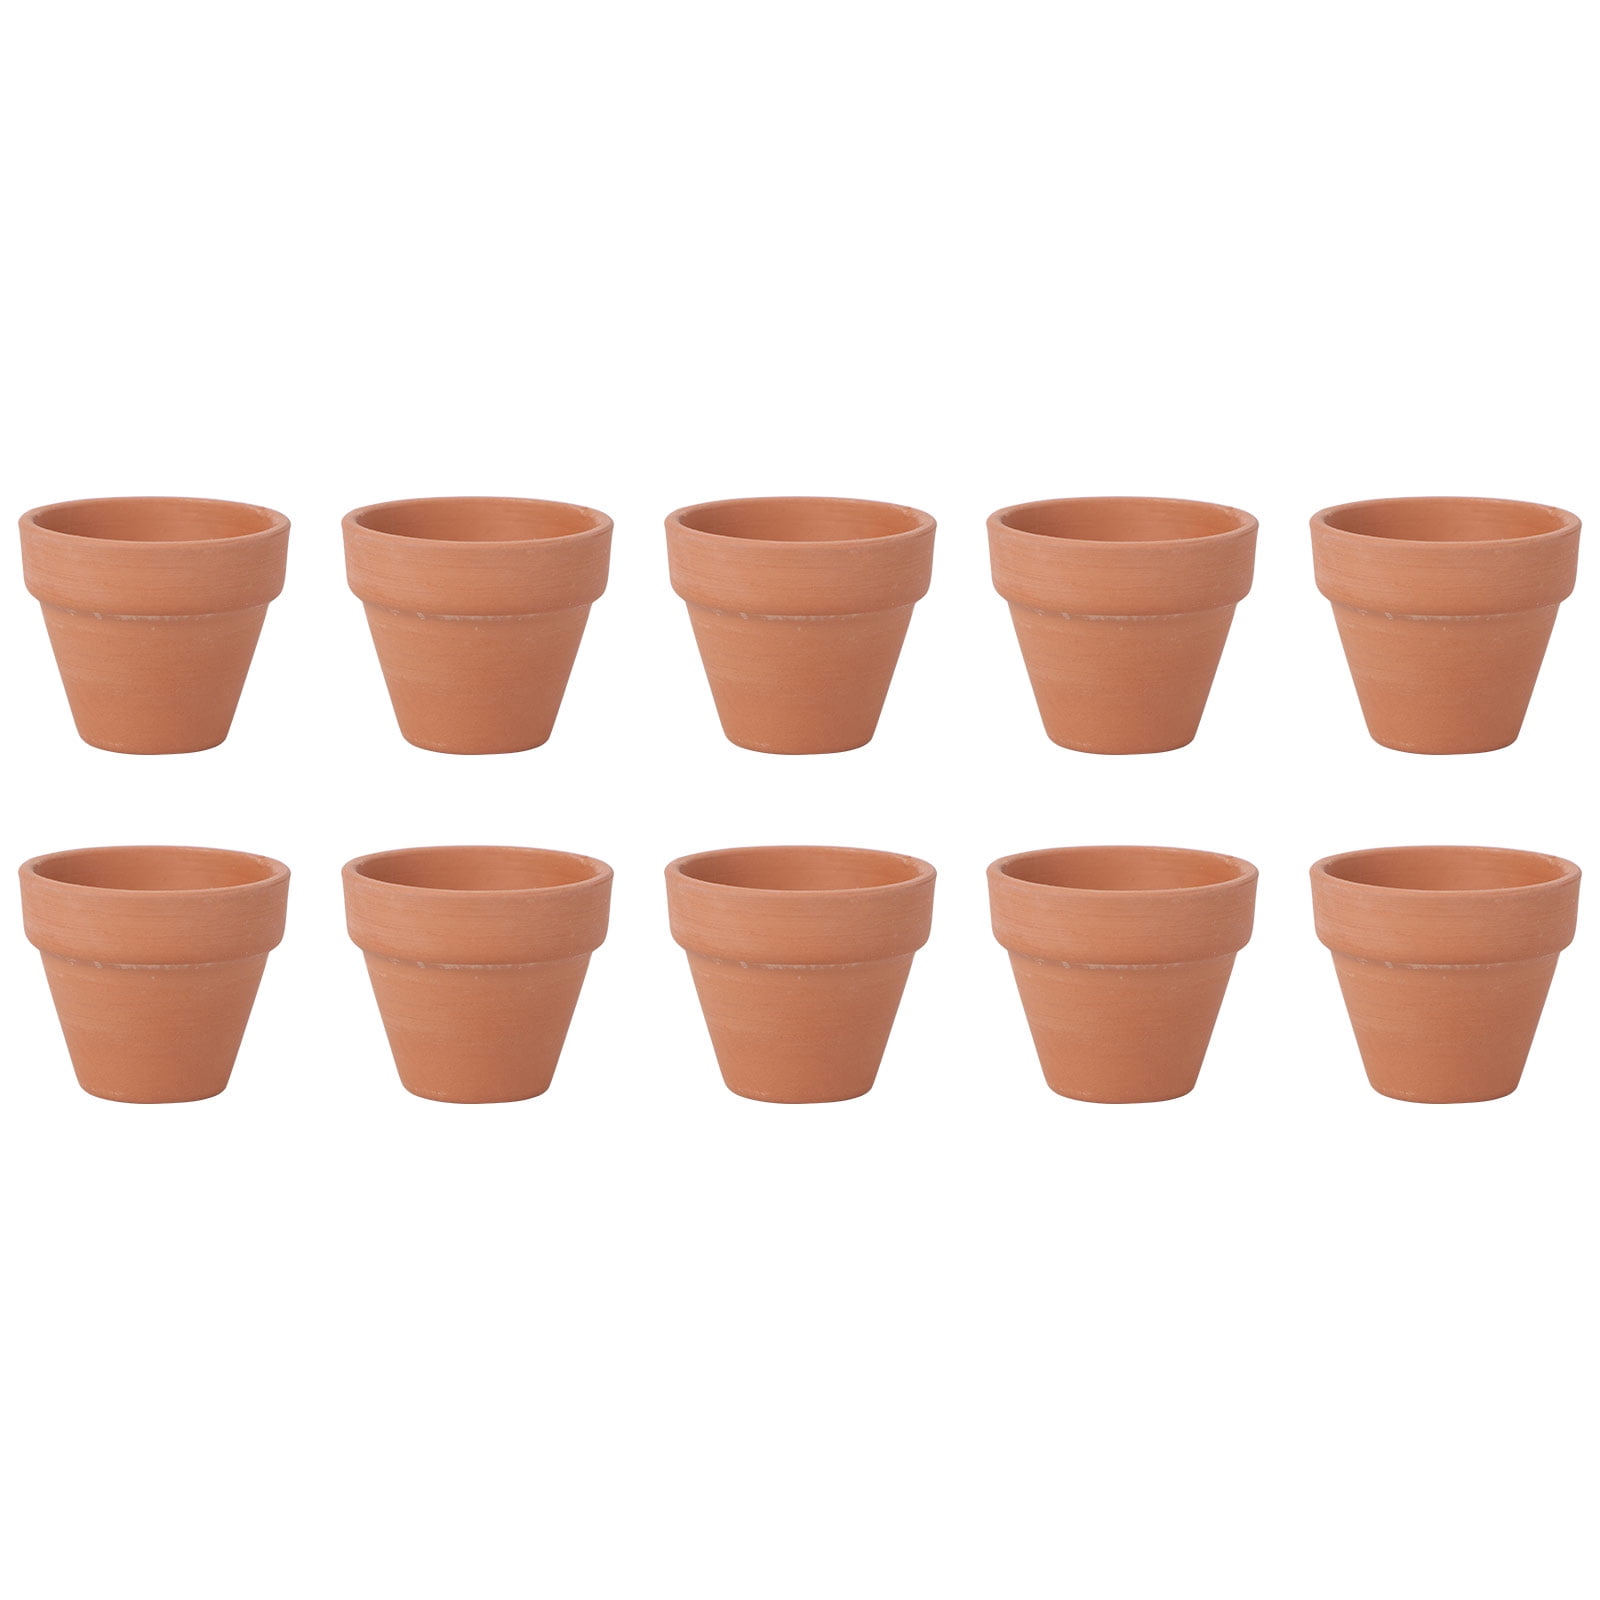 57 Pack 3.7 Terracotta Pot Clay Pots Planter Nursery Pots Clay Ceramic Pottery Cactus Flower Pots Succulent Nursery Pots Terra Cotta Pots Terracotta Pots Garden Flower Pot Succulent Pot 57